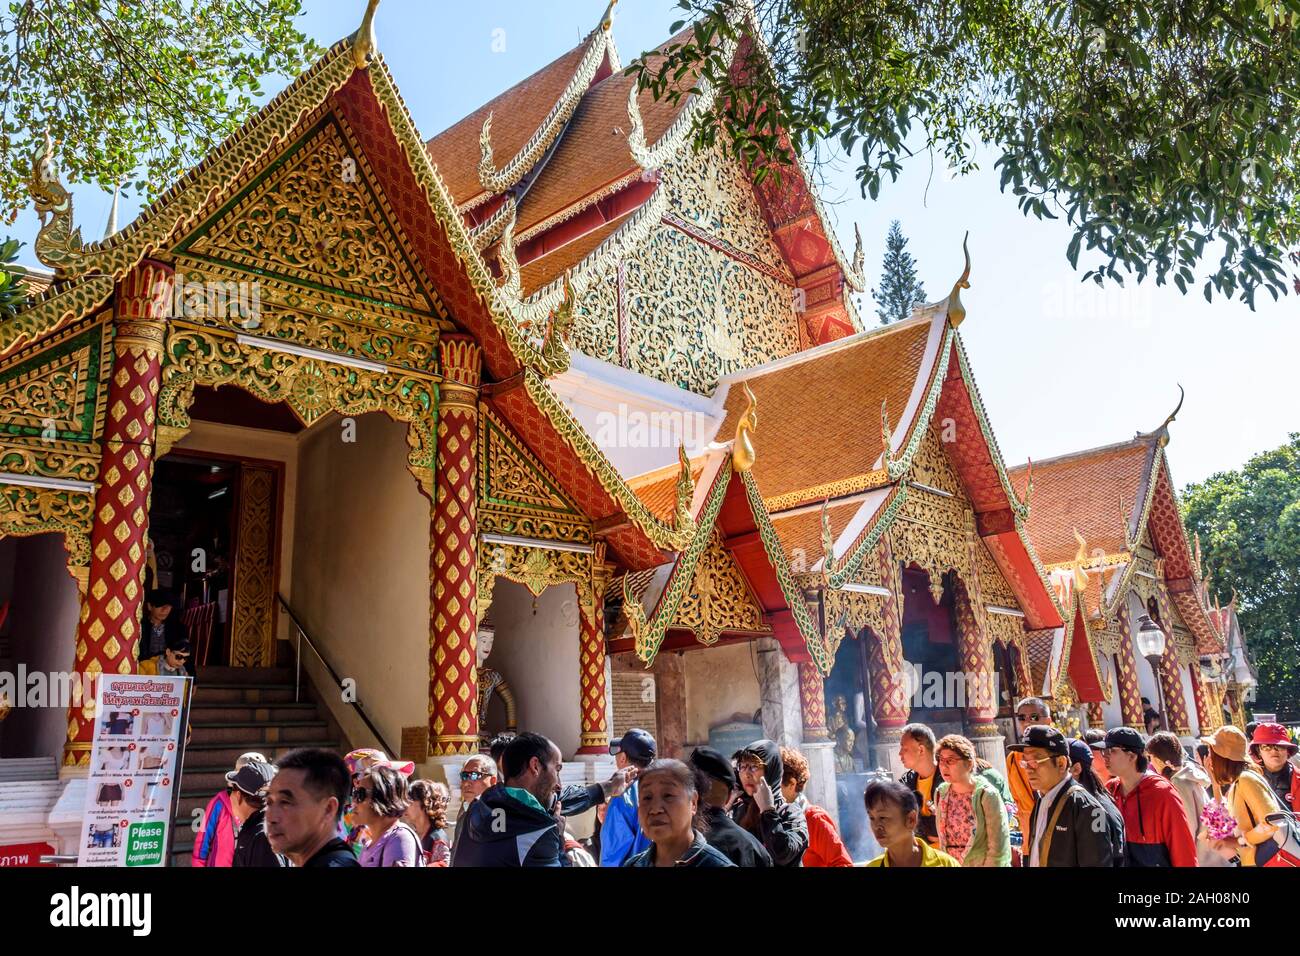 Chiang Mai, Thailand - December 10, 2019: Crowds of tourists at Wat Phra That Doi Suthep a Buddhist temple & famous tourist destination Stock Photo